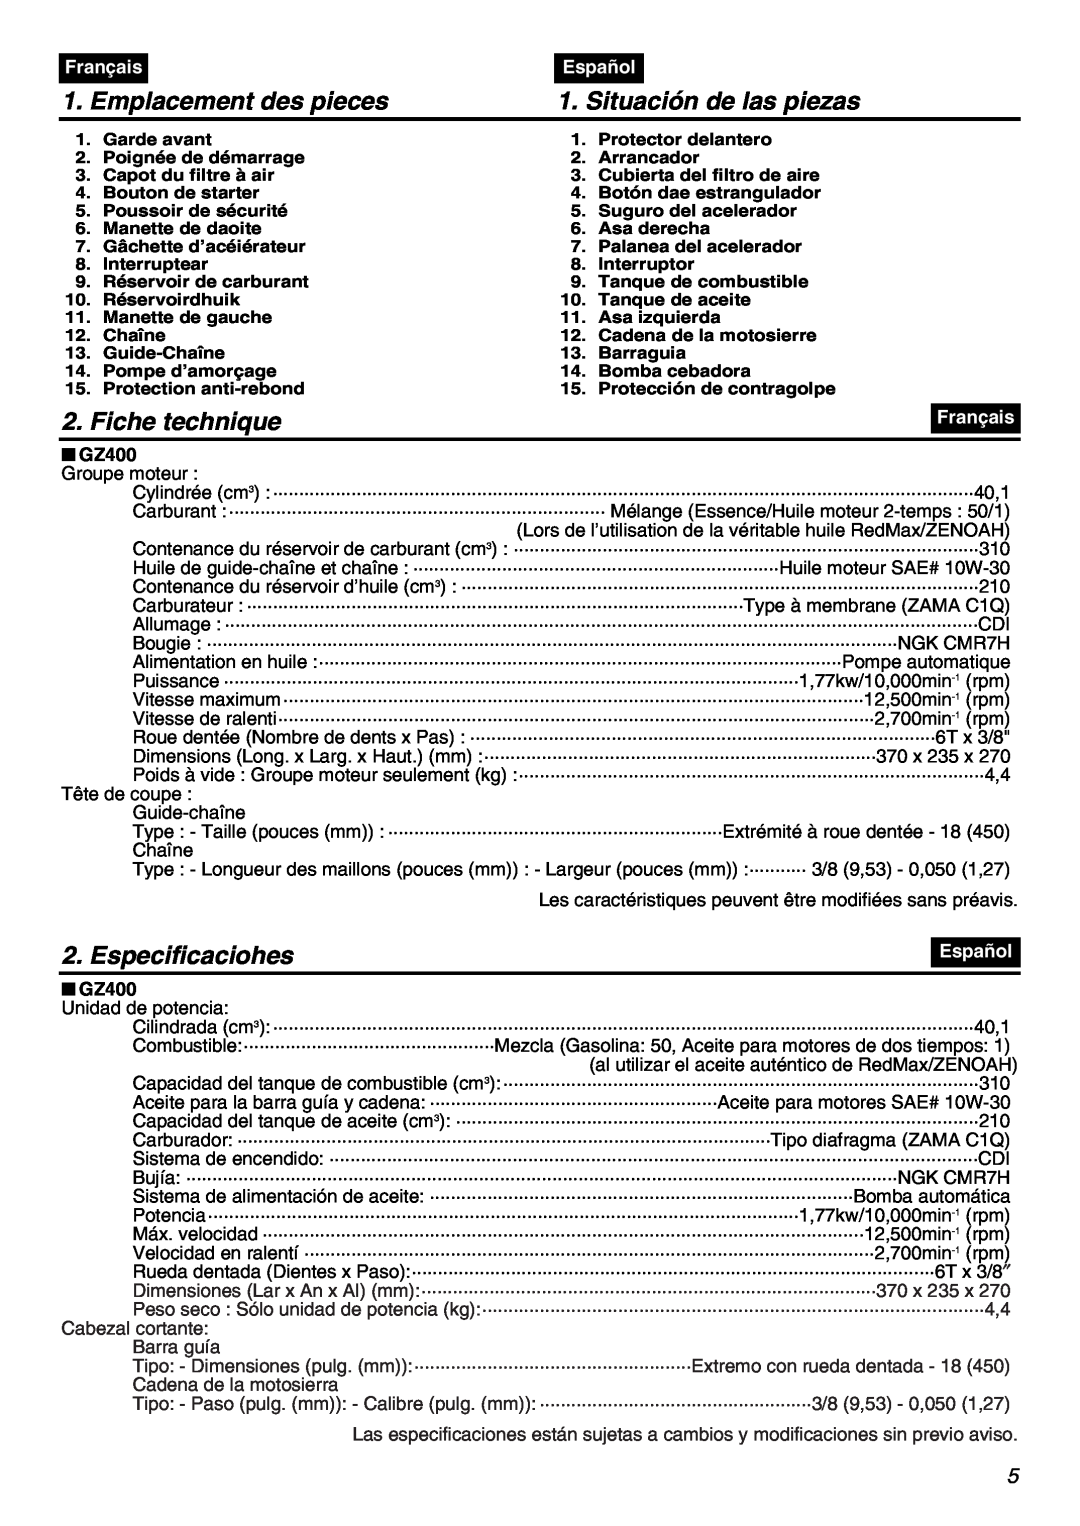 RedMax GZ400 manual Emplacement des pieces, Situación de las piezas, Fiche technique, Especificaciohes, Français, Español 